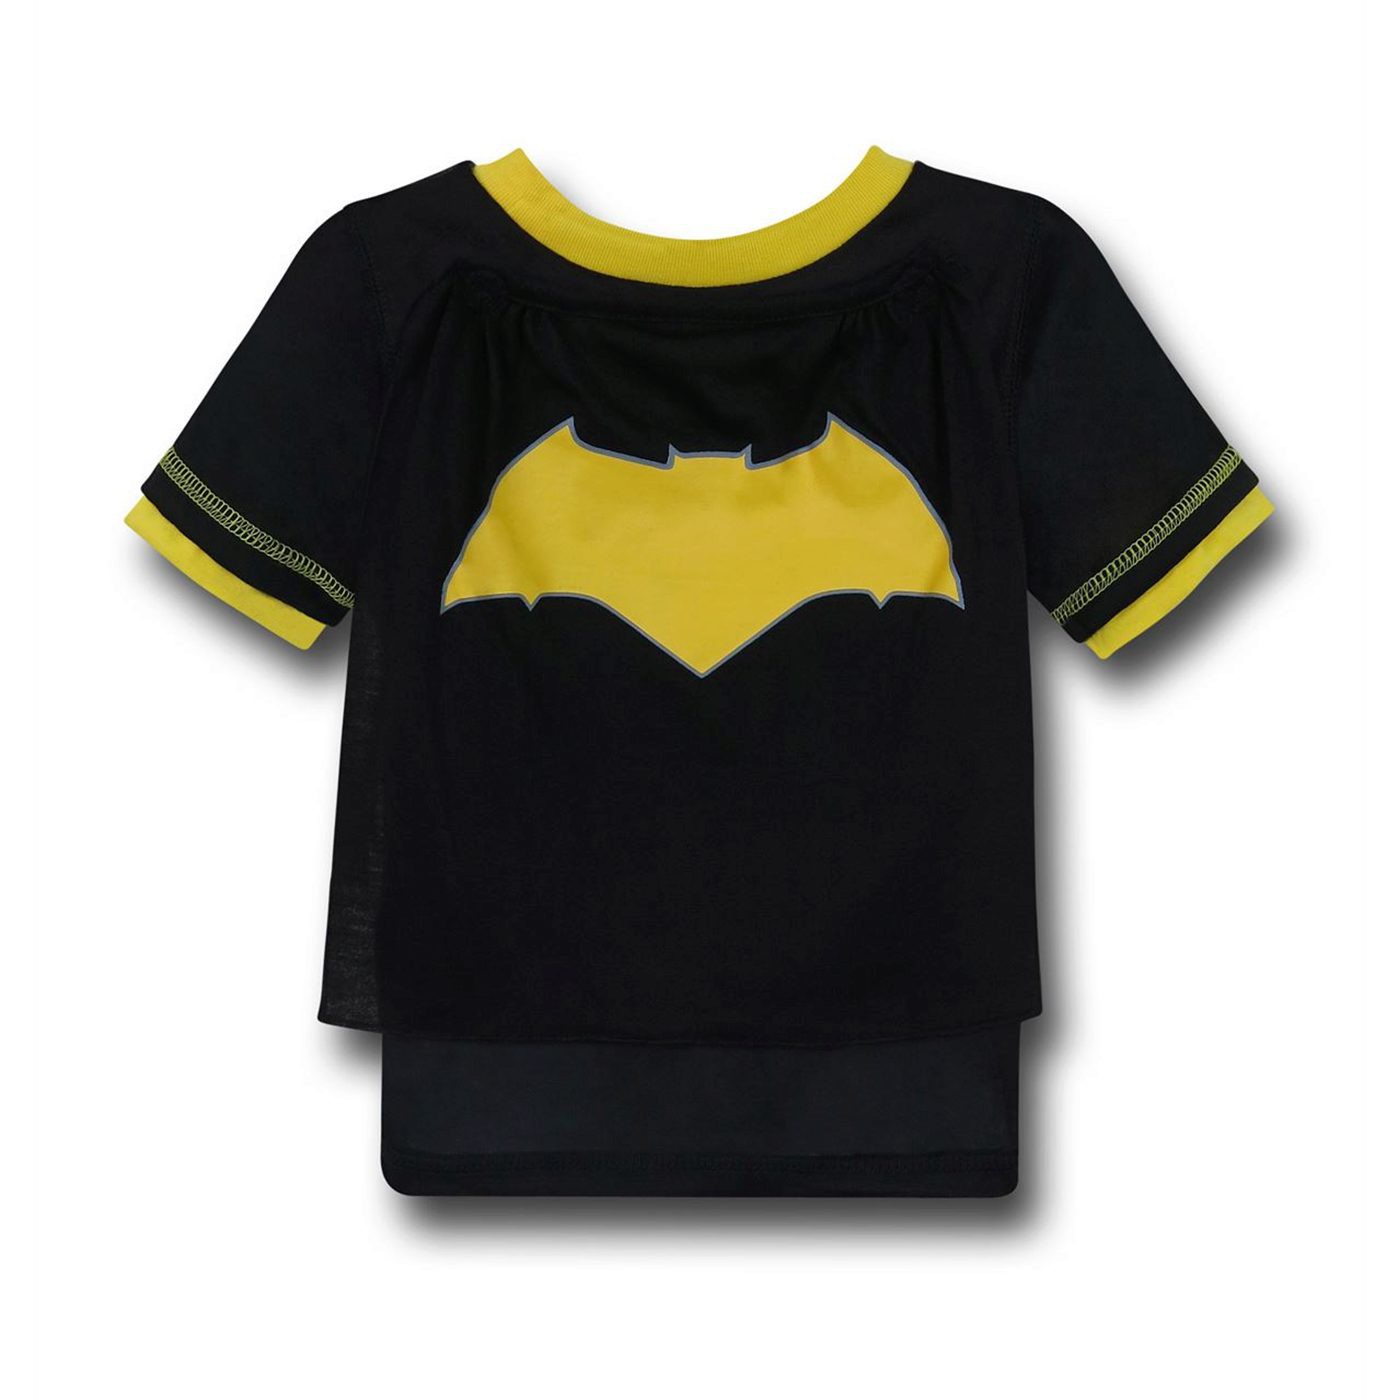 Batman Kids Caped Pajama Set with Shorts